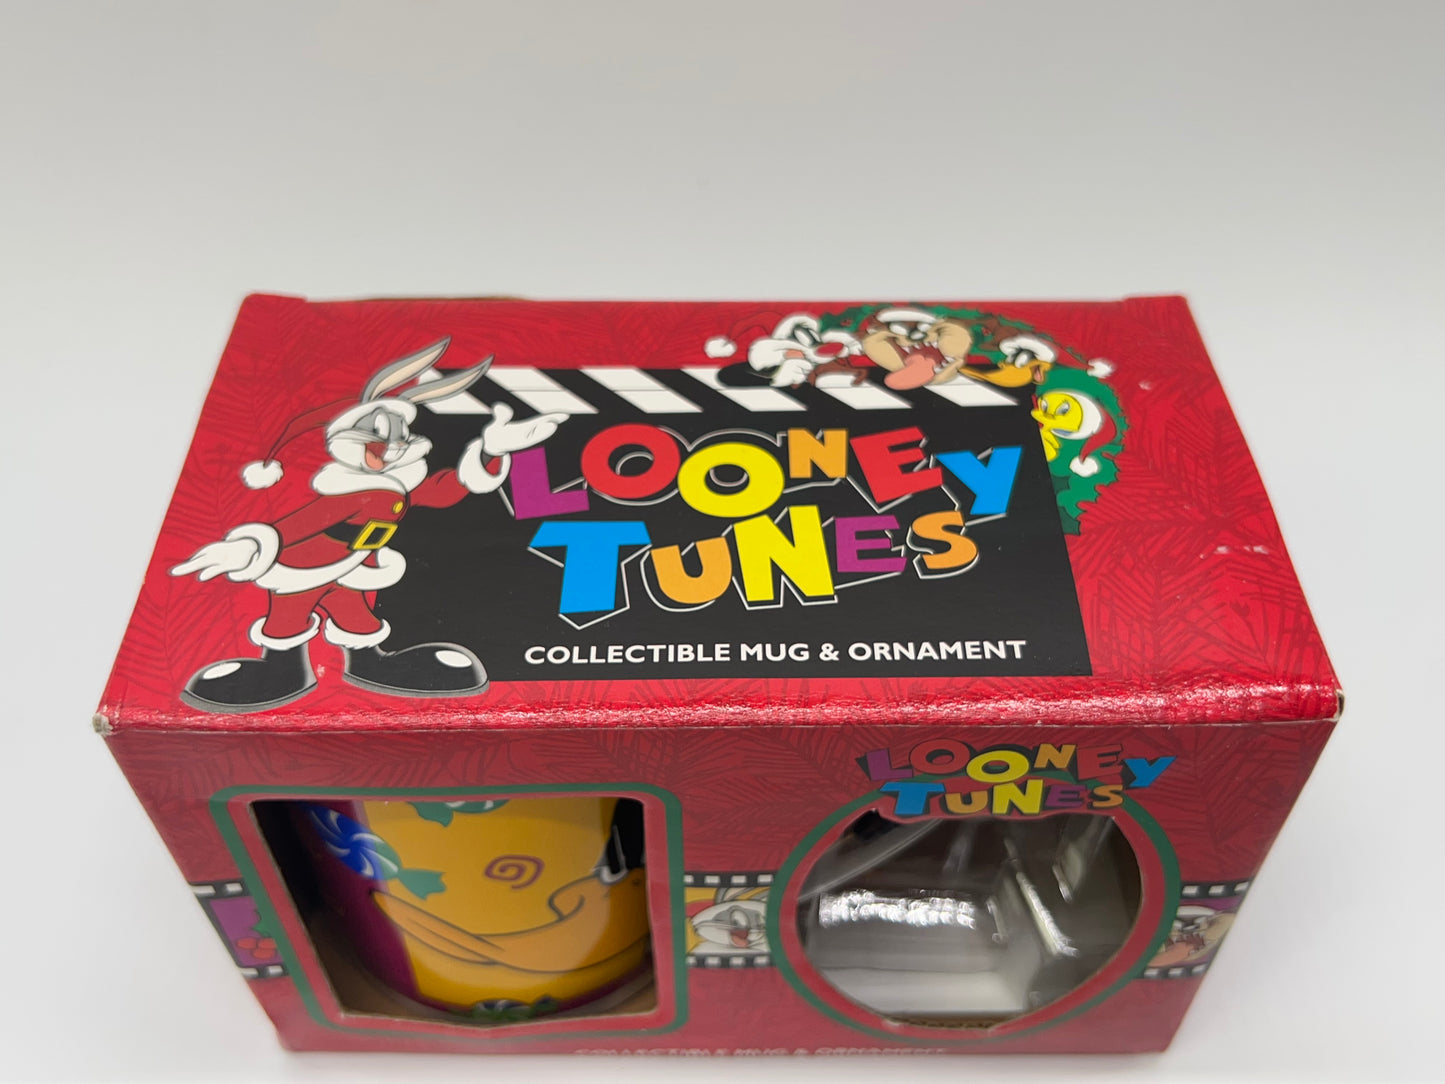 Looney Tunes Warner Bros. Daffy Duck Collectible Mug & Ornament New in Box NIB